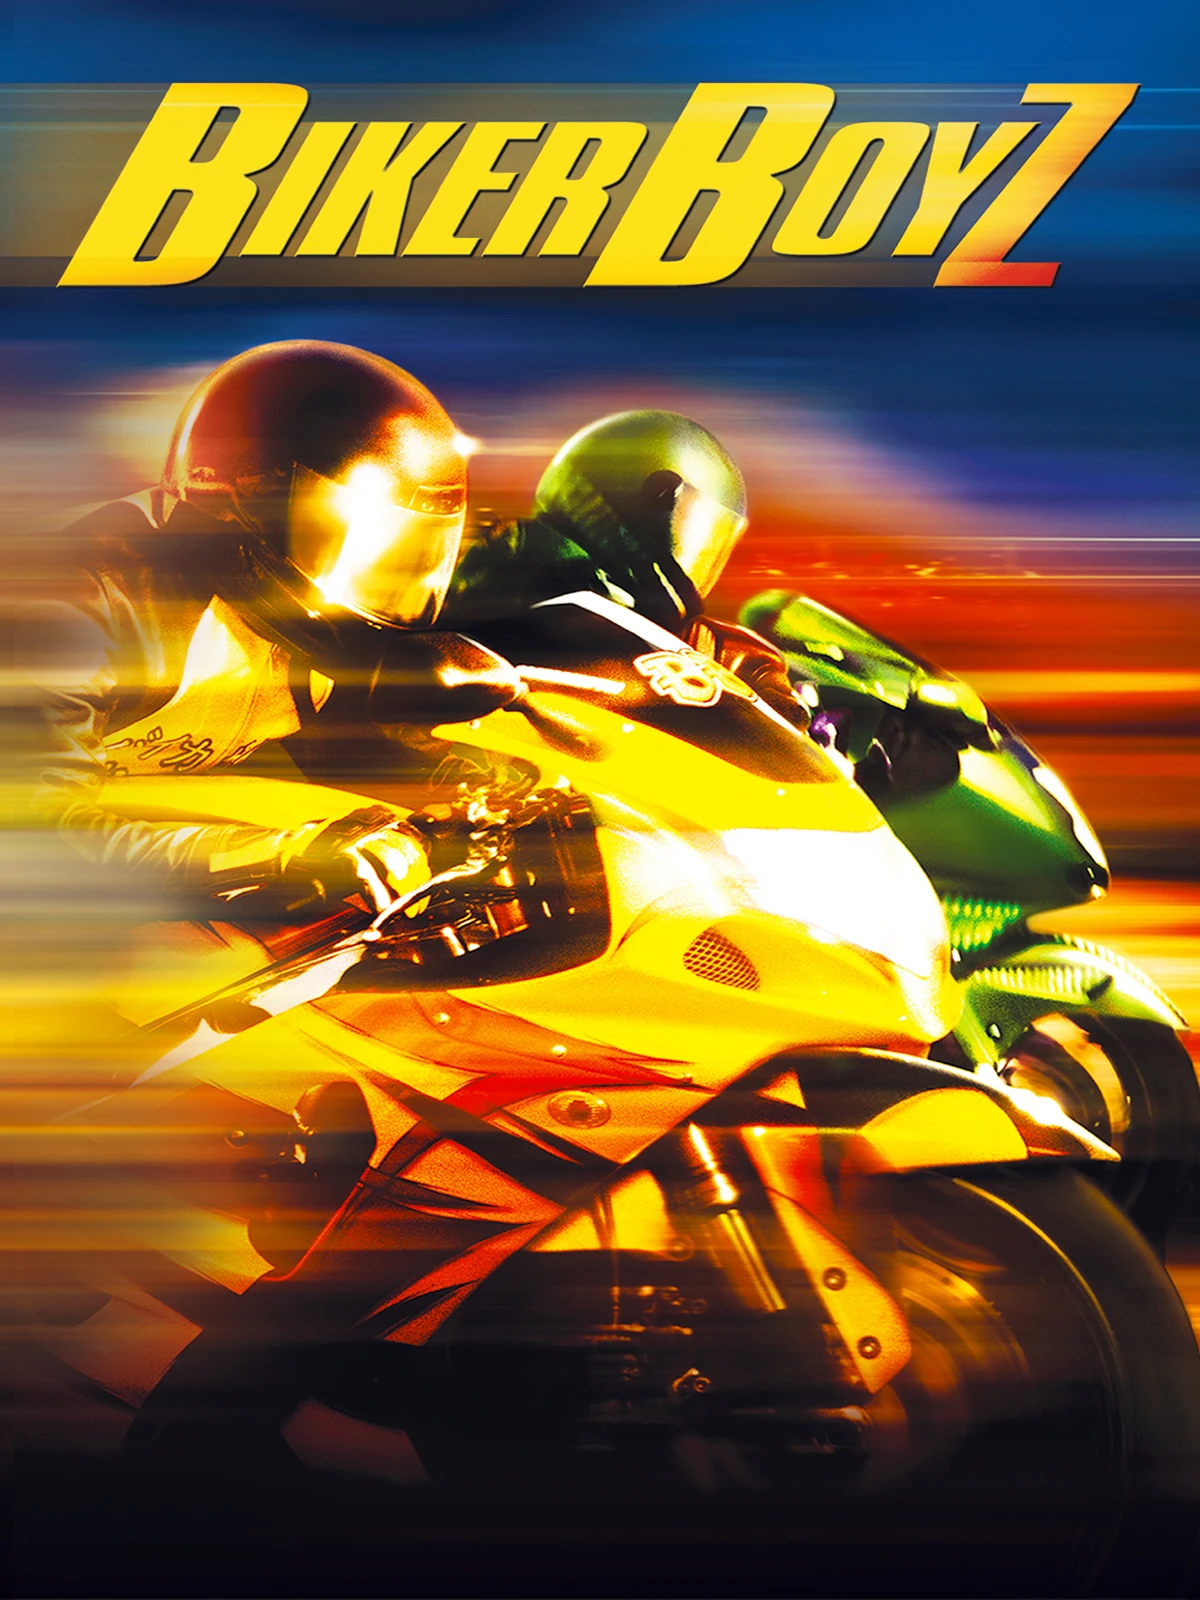 FULL MOVIE: Biker Boyz (2003) [Action]